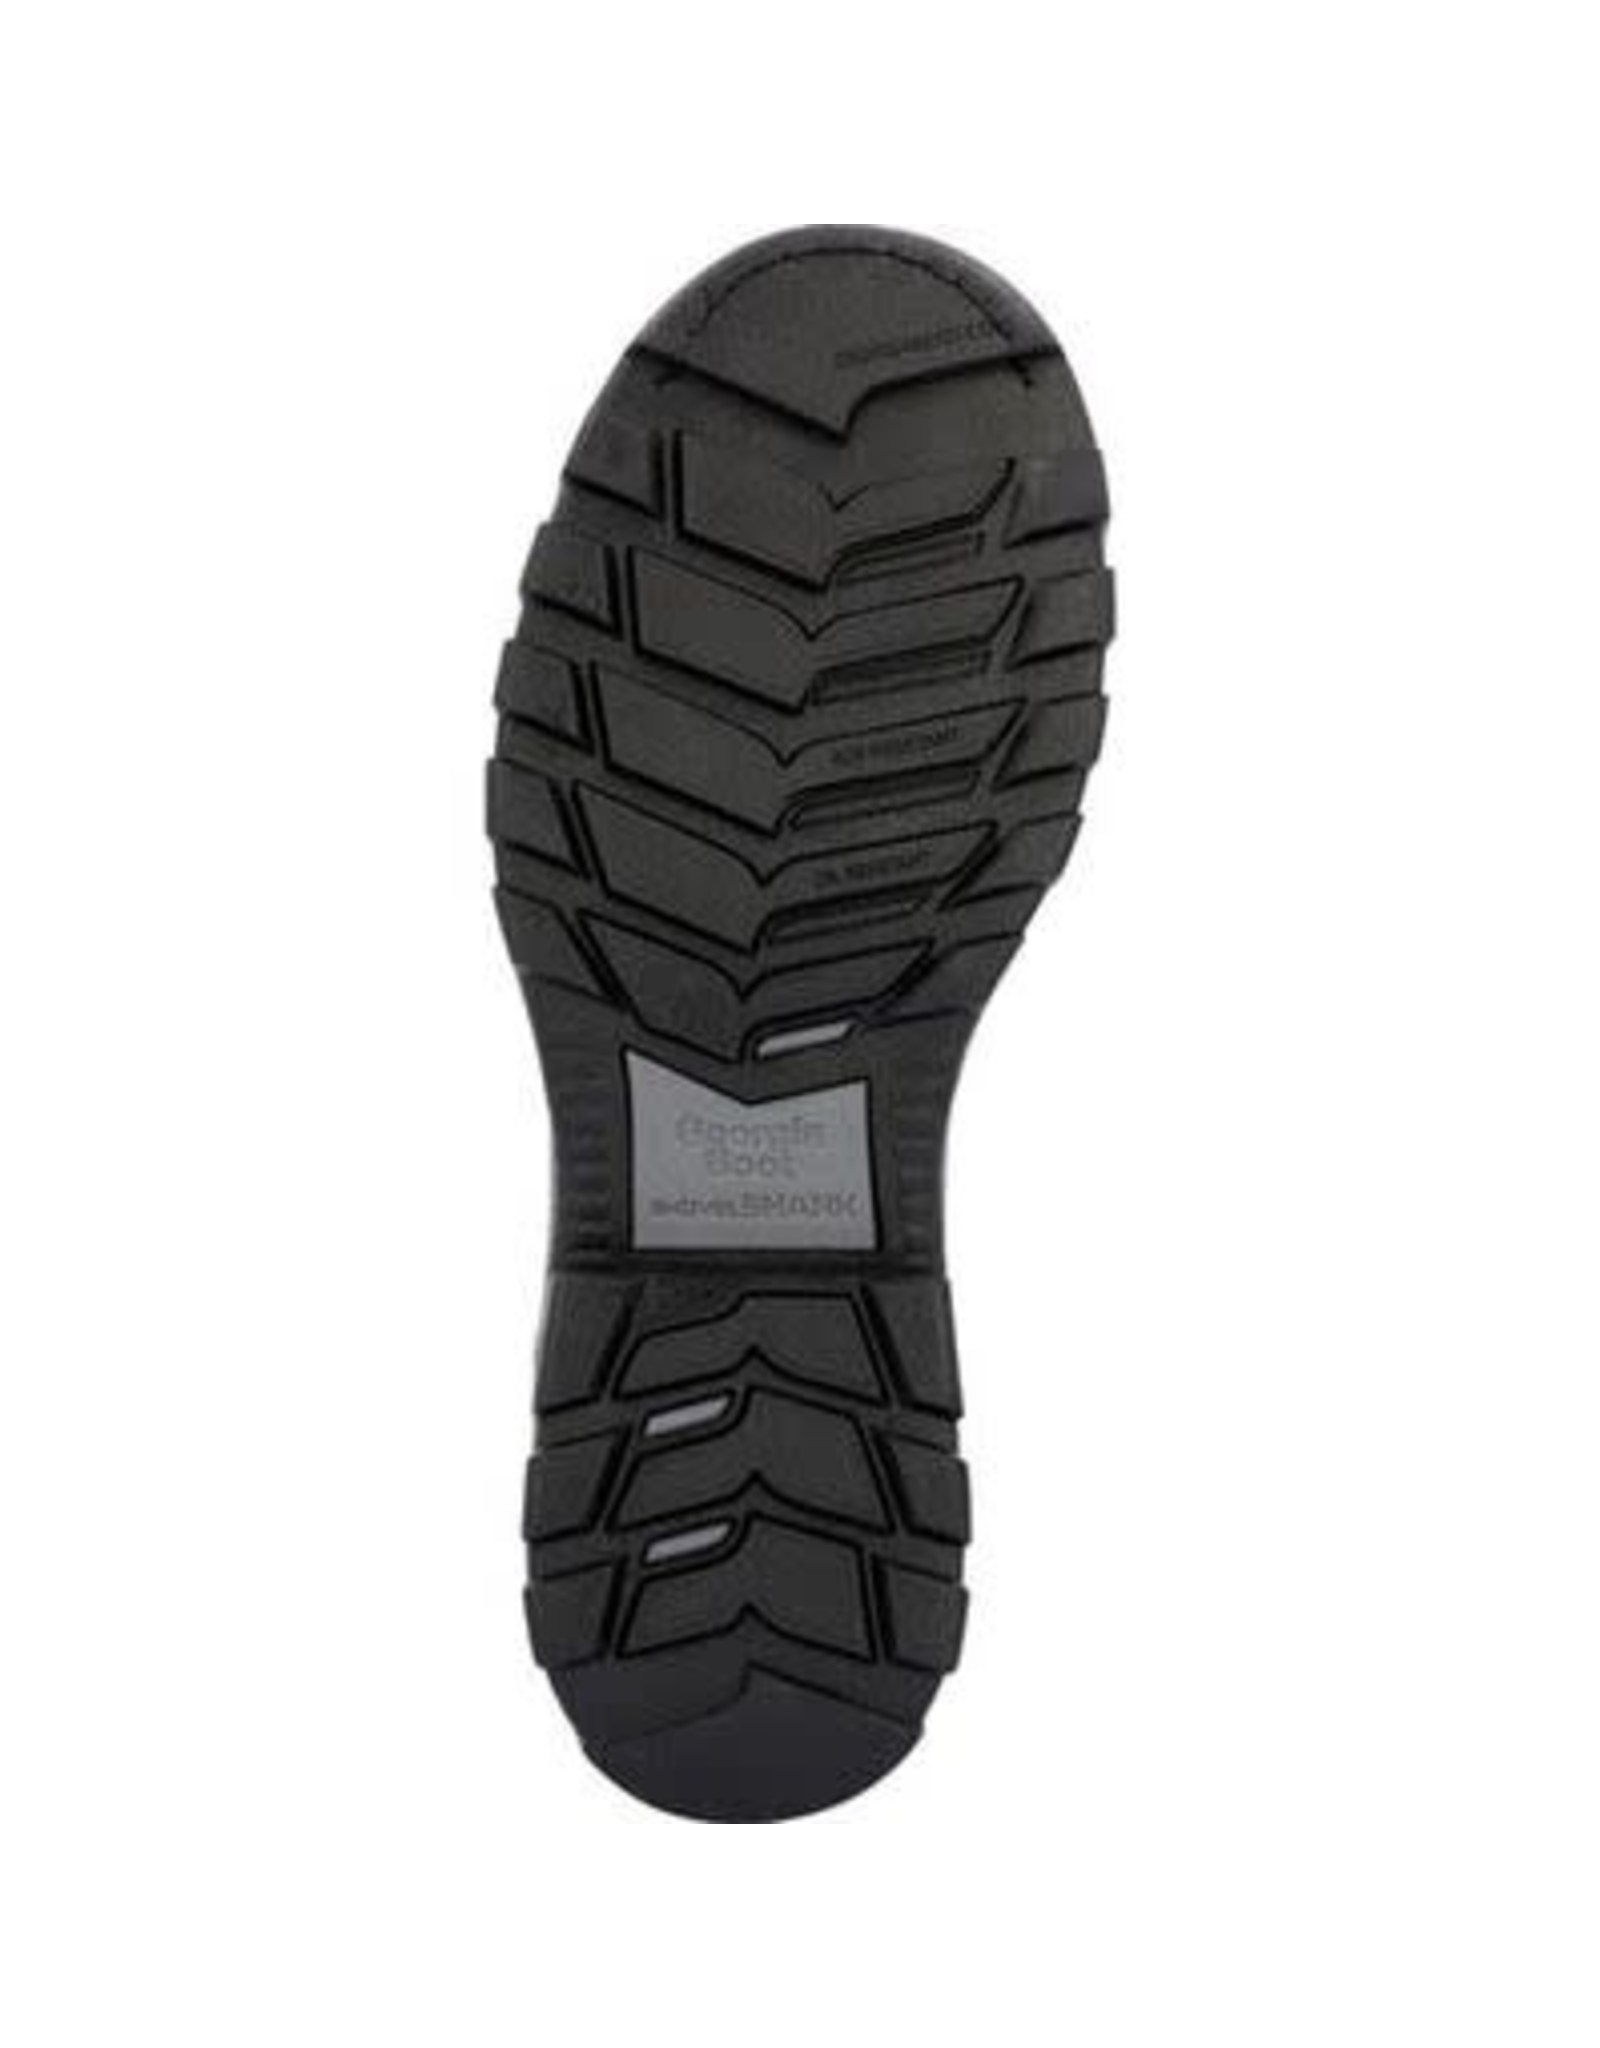 Georgia Men’s Eagle 1 Waterproof Chelsea Black GB00563 Steel Toe Work Boots